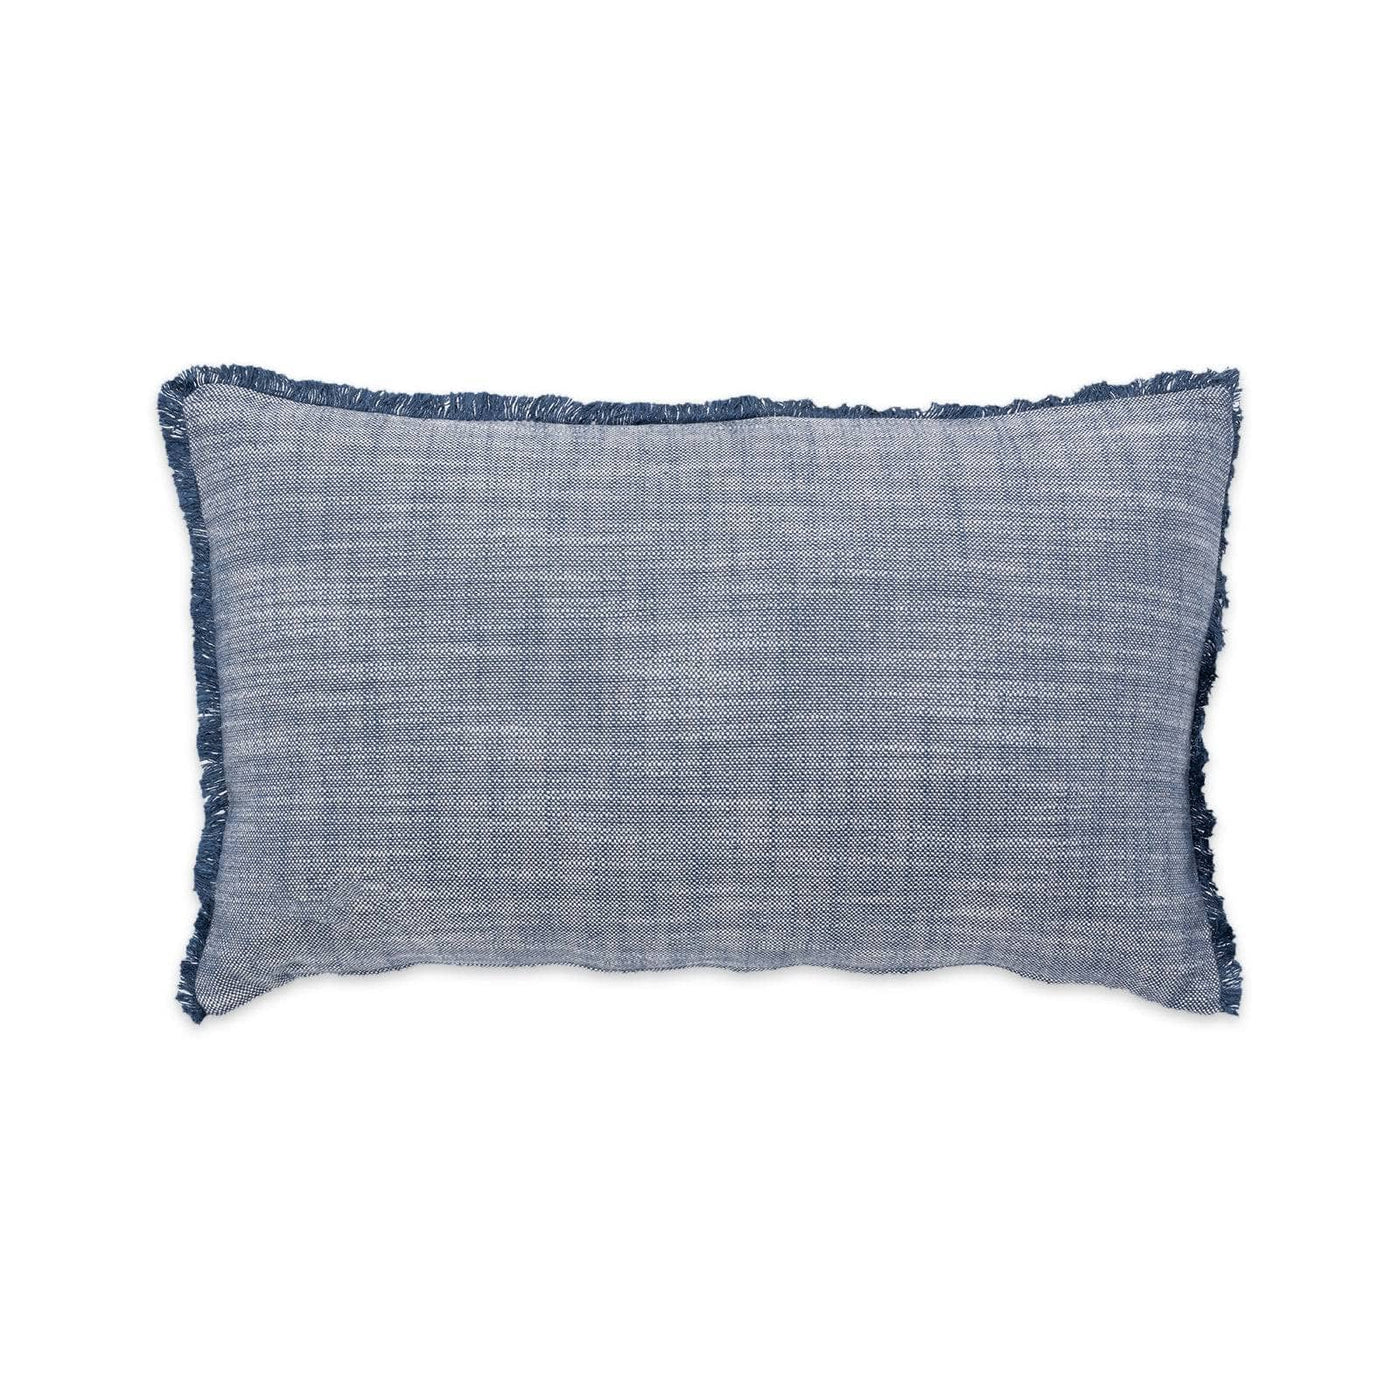 Optical Fringed Cushion Cover, Blue, 30x50 cm Cushion Covers sazy.com